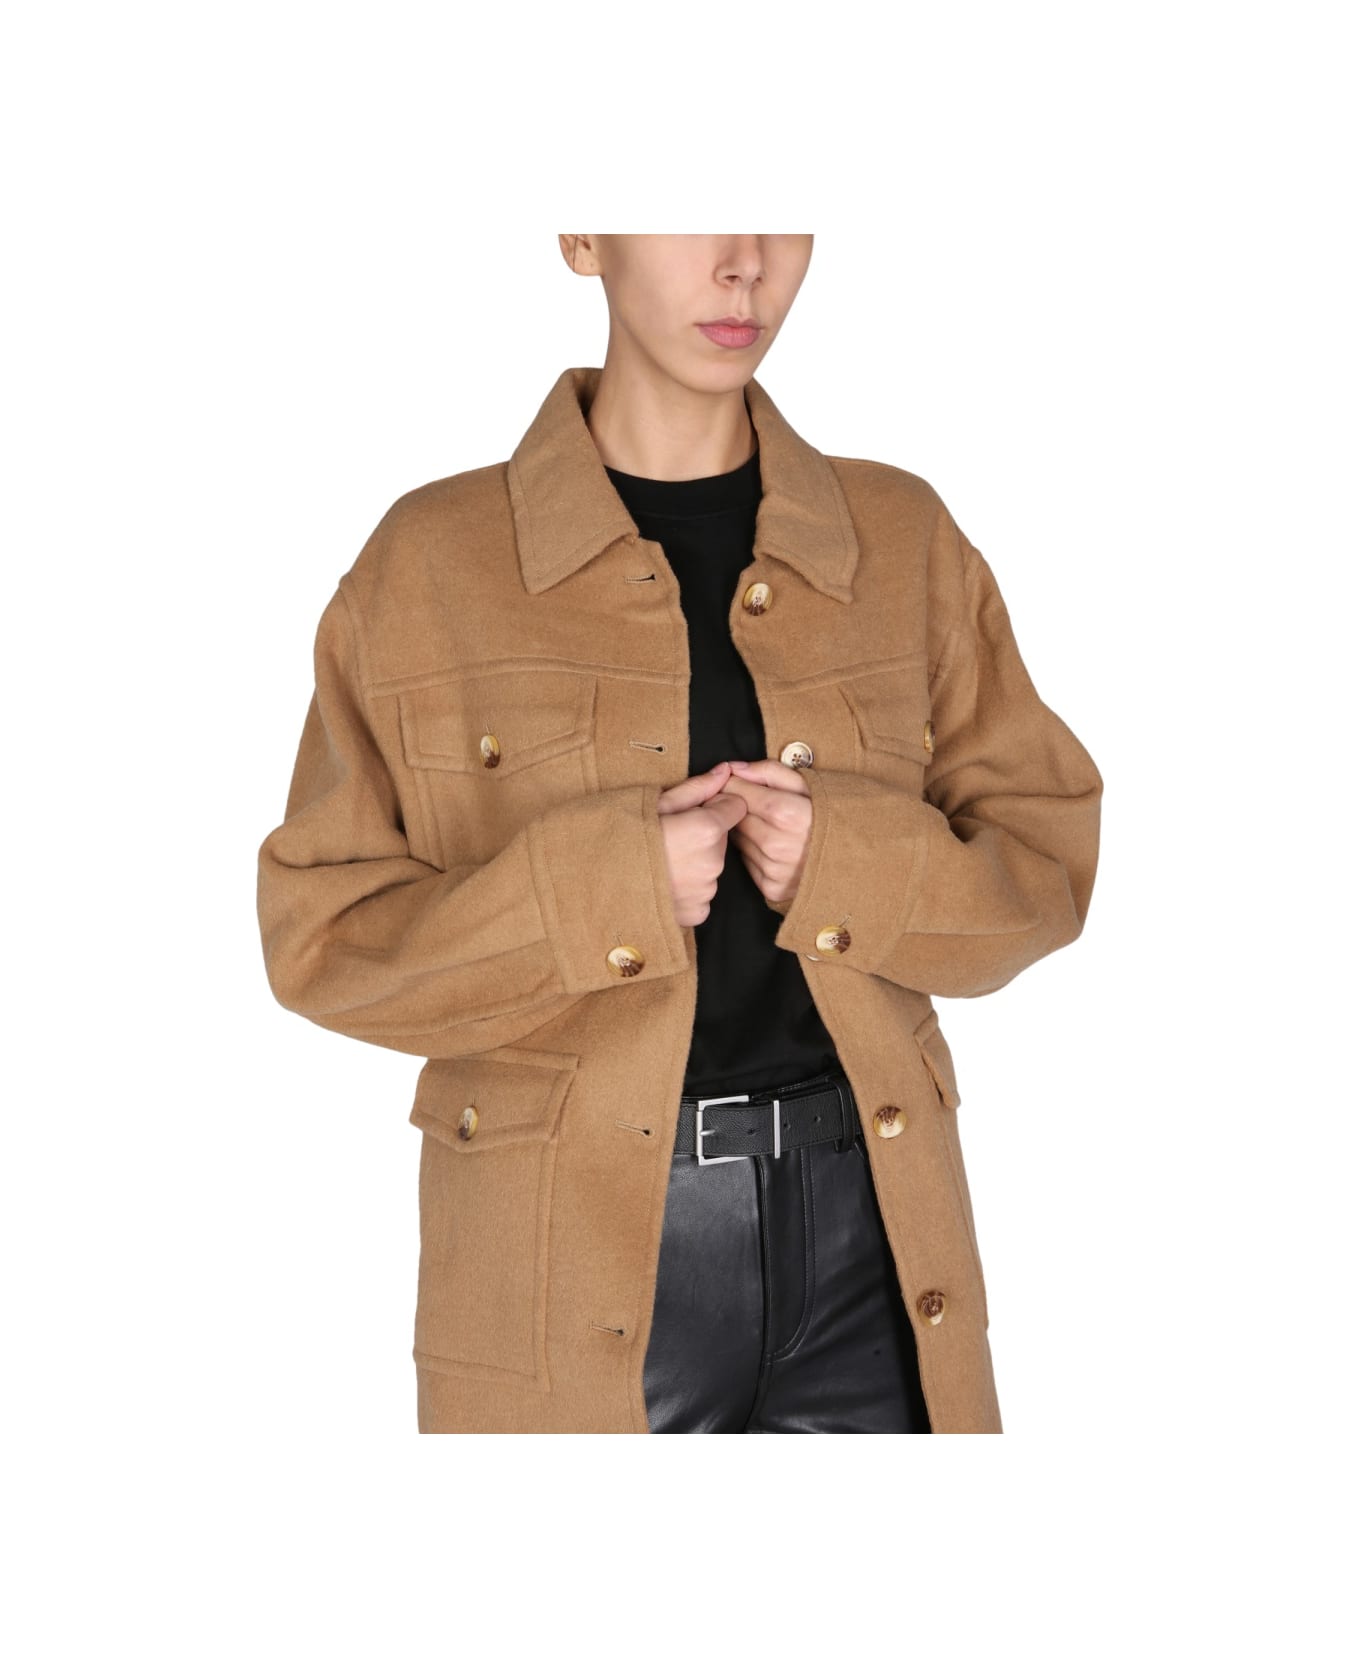 Michael Kors Shirt Jacket - BEIGE